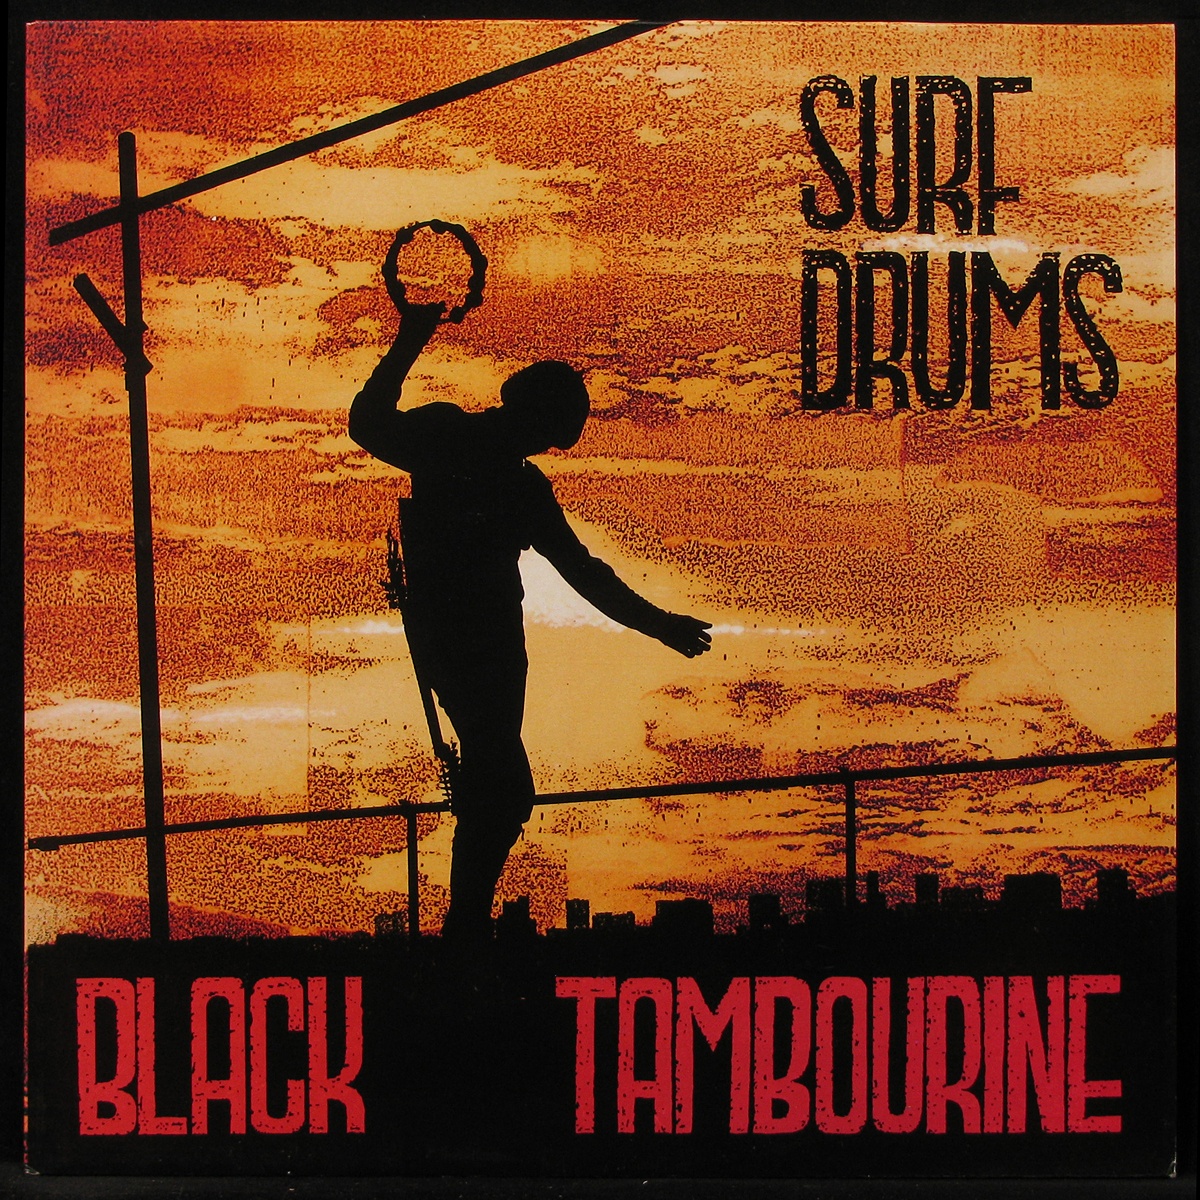 LP Surf Drums — Black Tambourine (maxi) фото